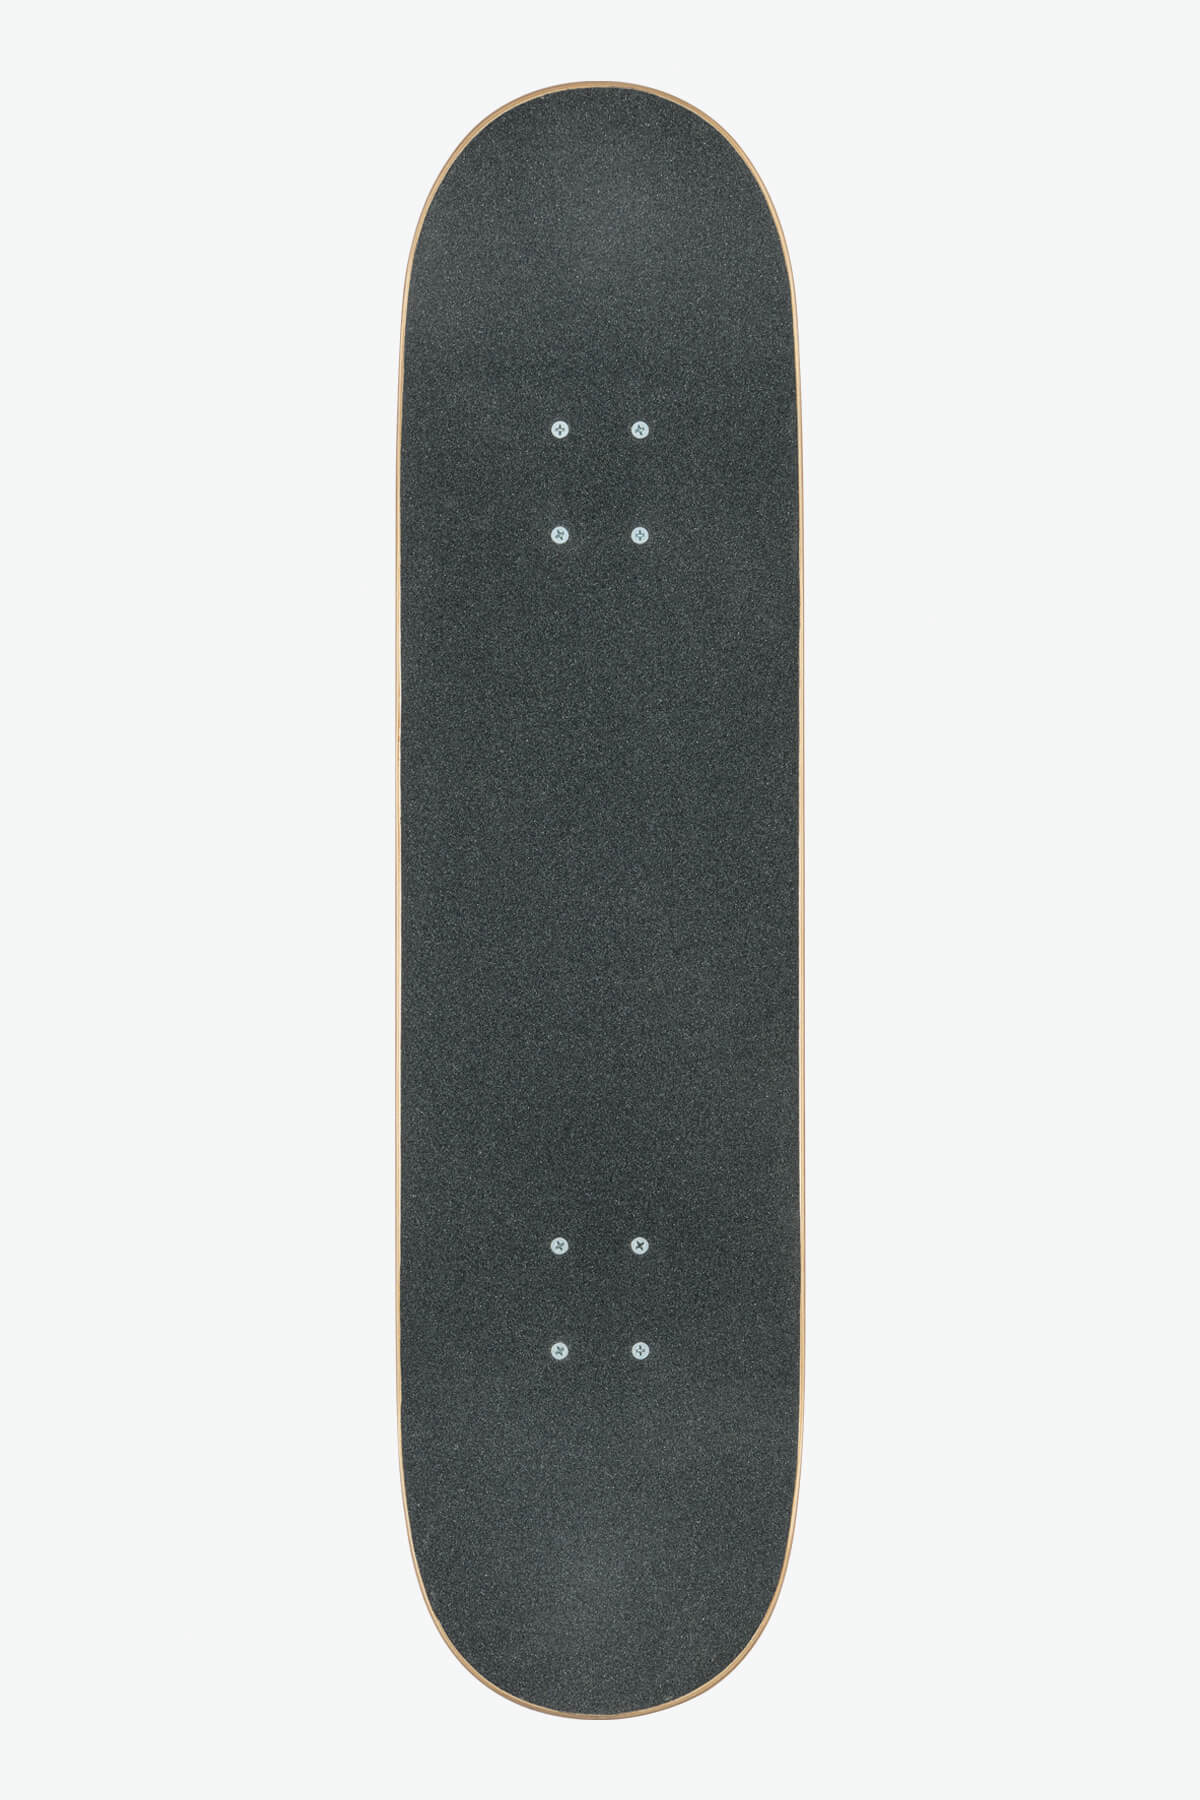 Globe - G0 Fubar - Haze/Off-White - 7,75" completo Skateboard